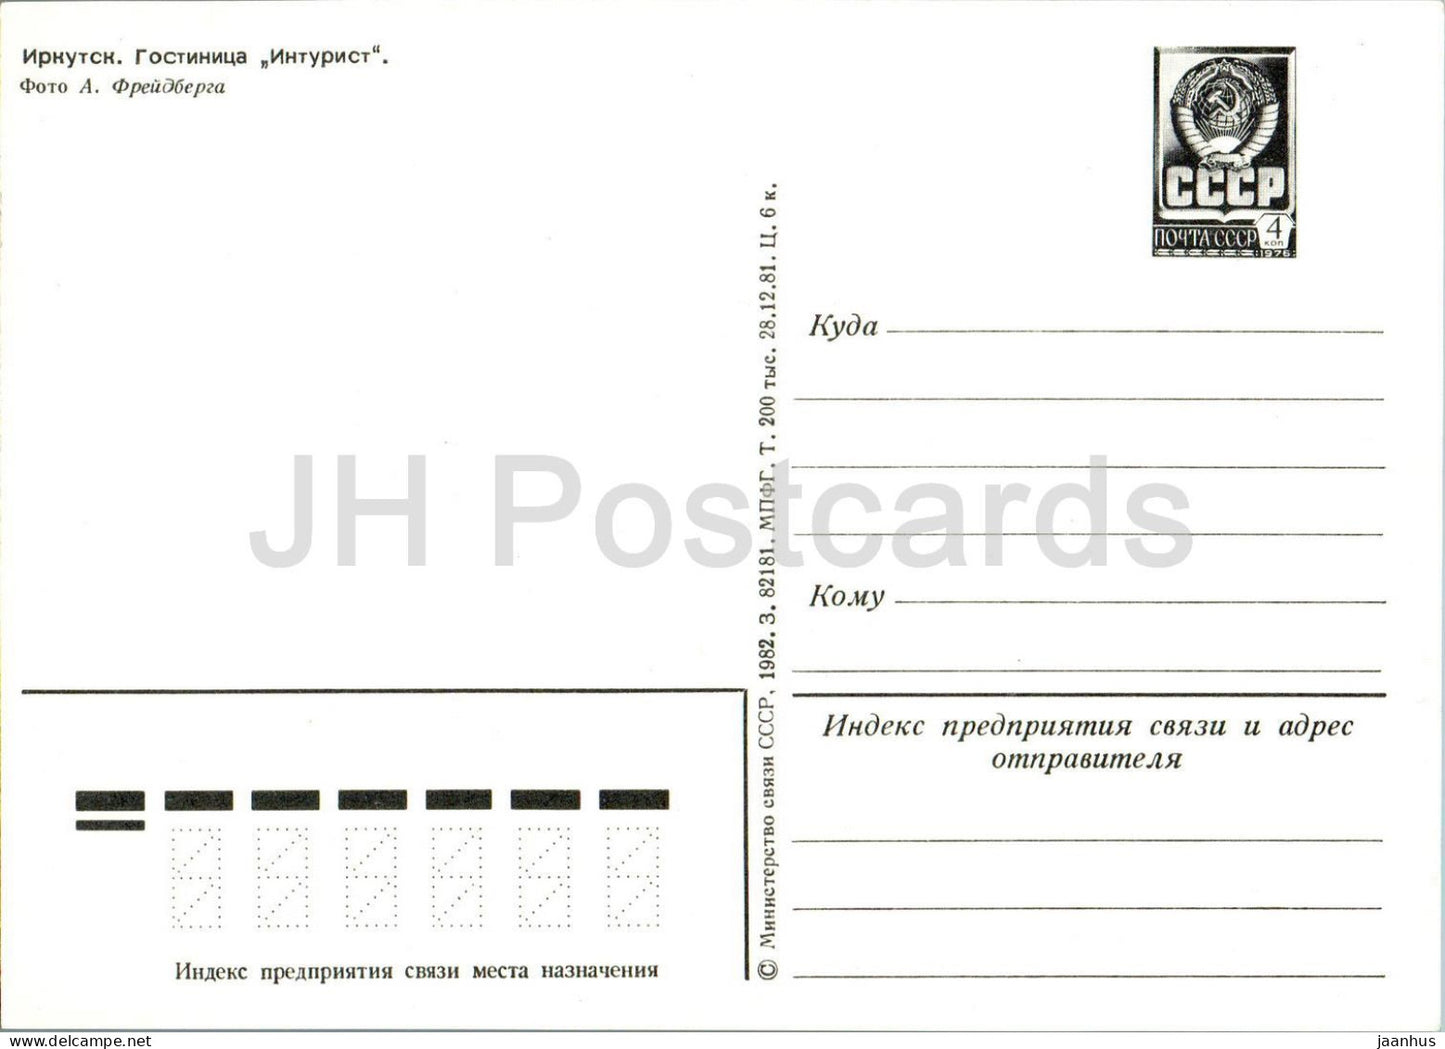 Irkoutsk - hôtel Intourist - entier postal - 1982 - Russie URSS - inutilisé 